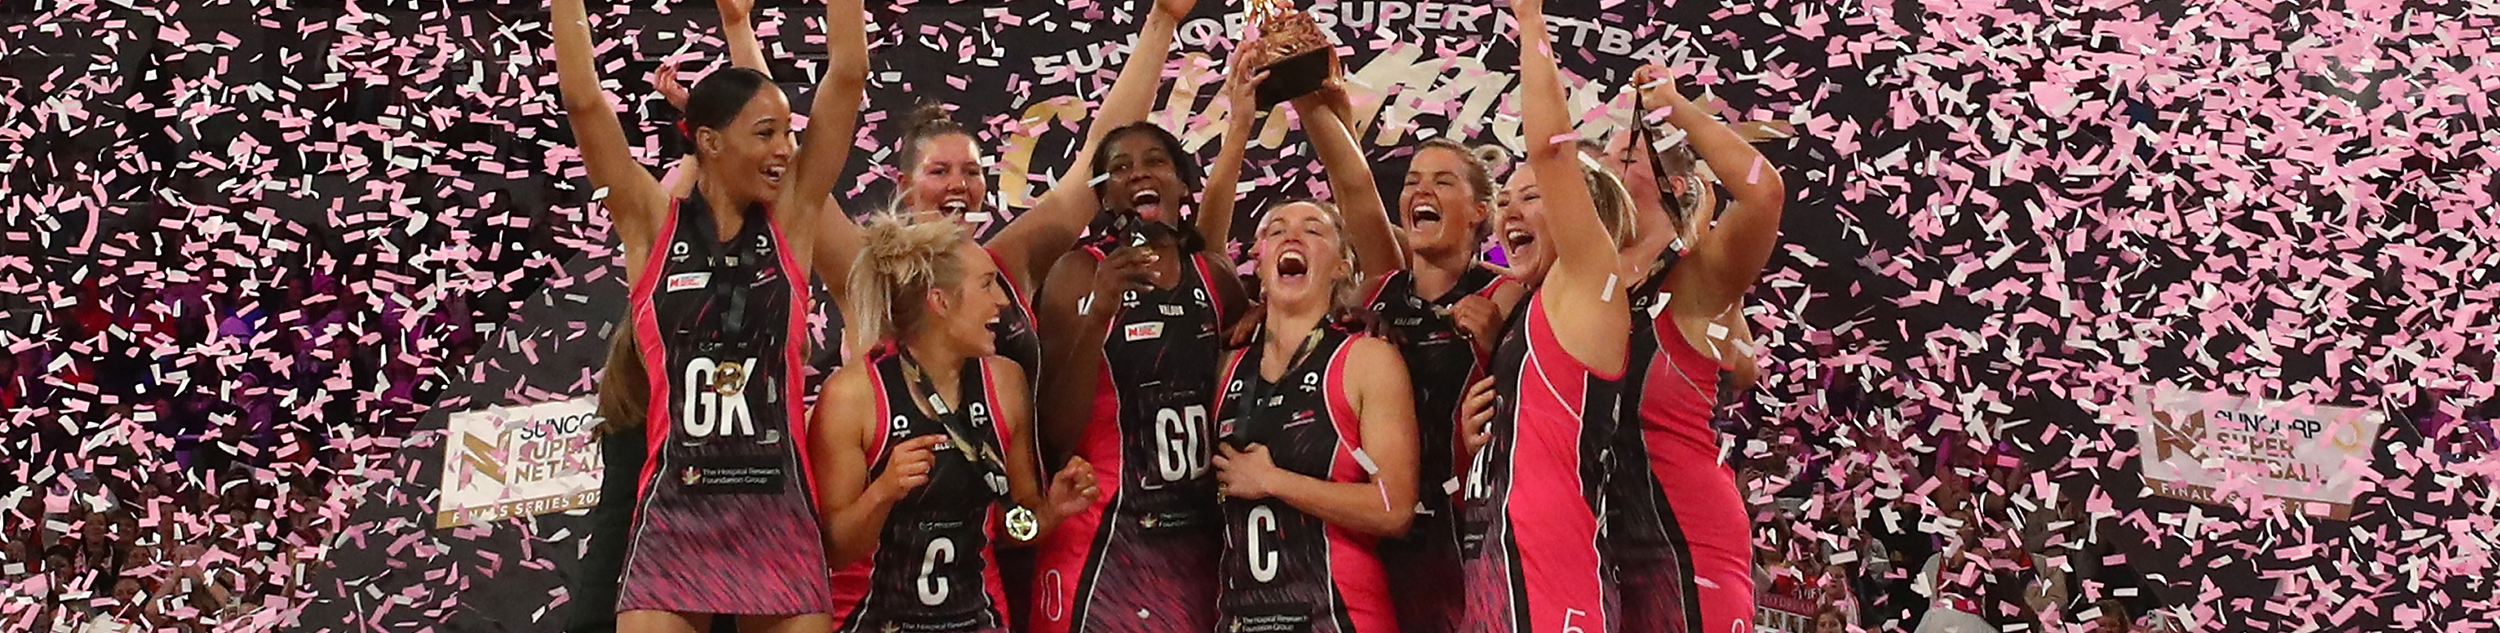 Adelaide Thunderbirds players celebrating with confetti falling around them